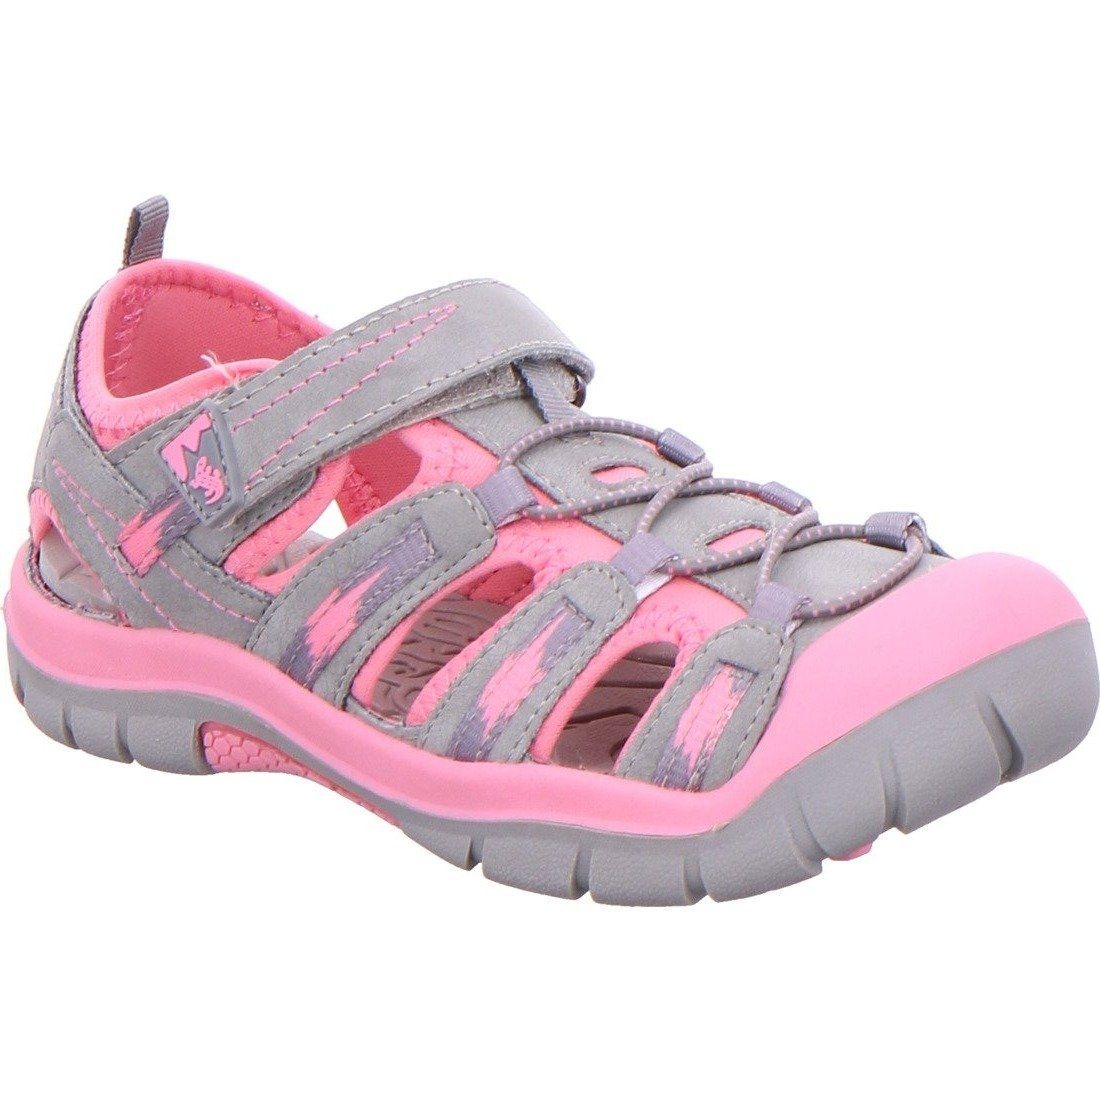 Stampede - Closed Child Grey UK Toe 11.5 Shoes Rose 3321613-23: Sandal Lurchi Pete